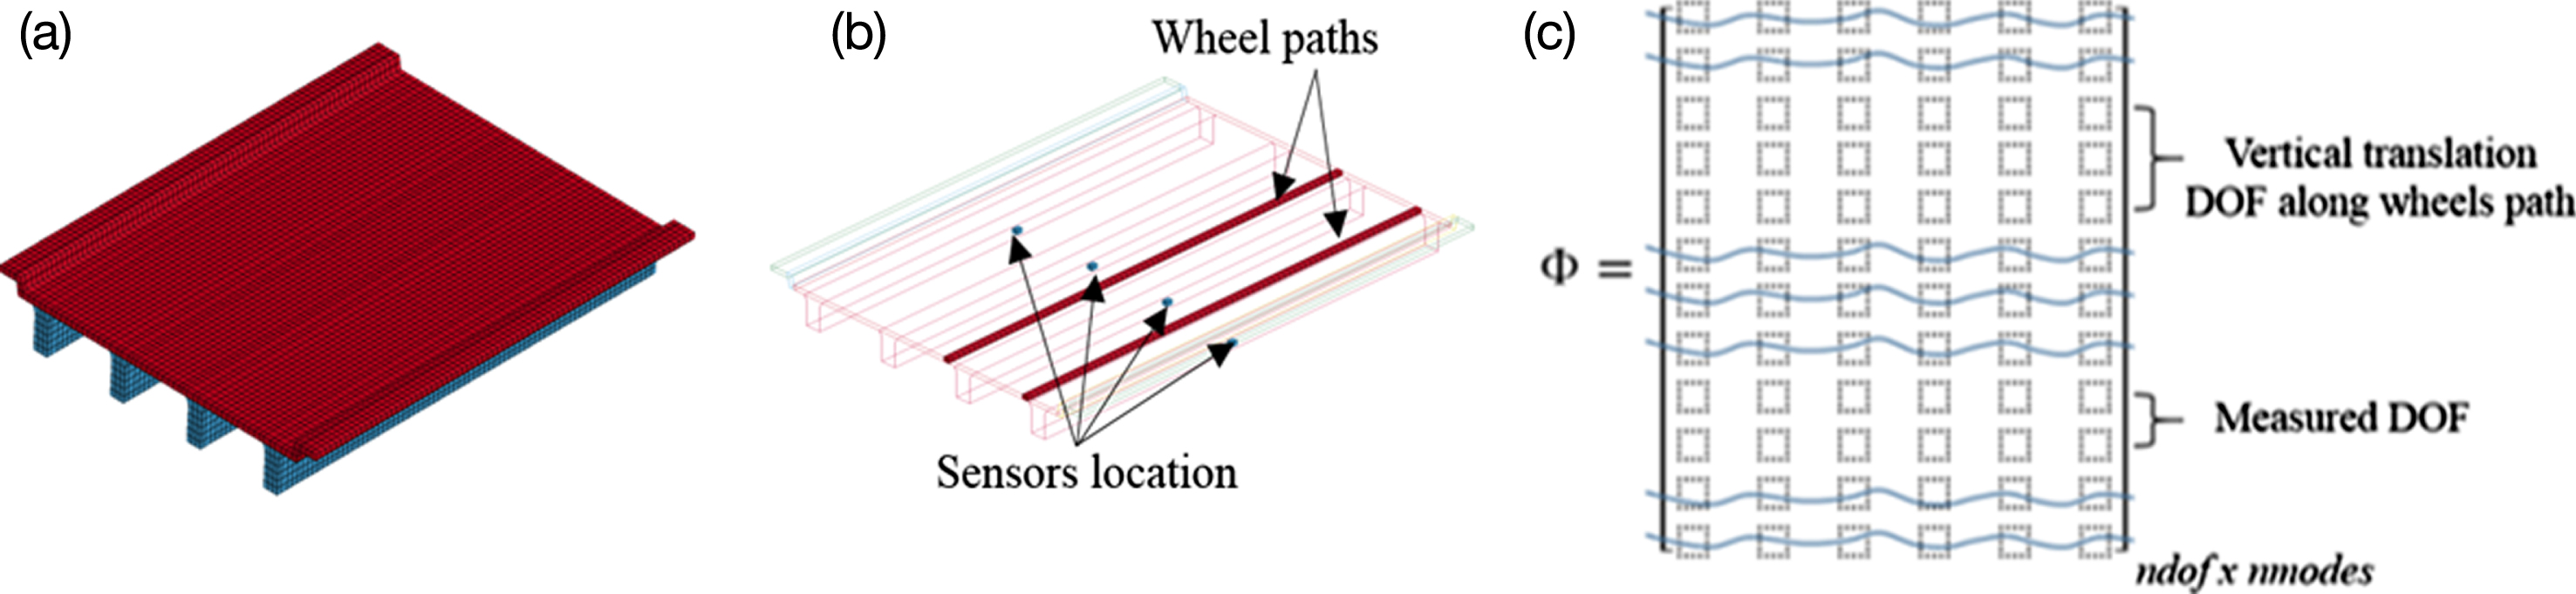 (a) Full bridge model, (b) Measurements and wheel paths elements, and (c) Matrix of eigenvectors after reduction.